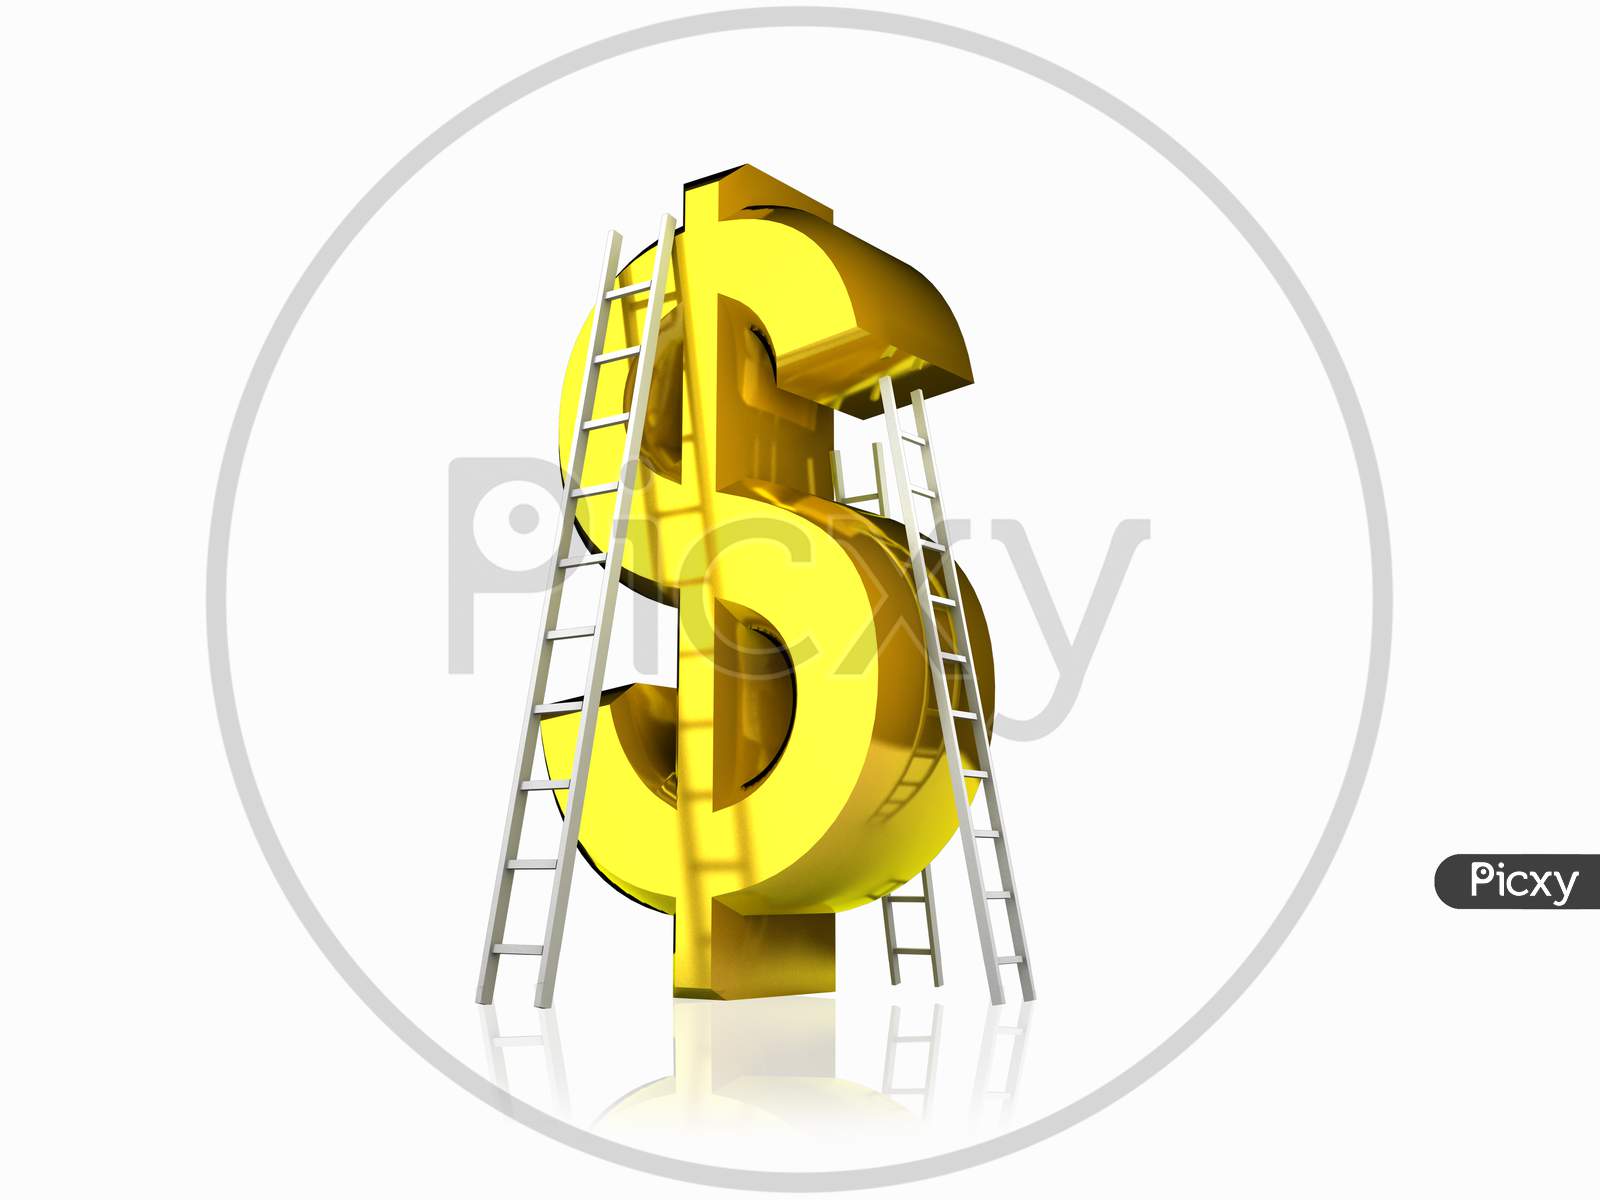 3-D golden dollar symbol